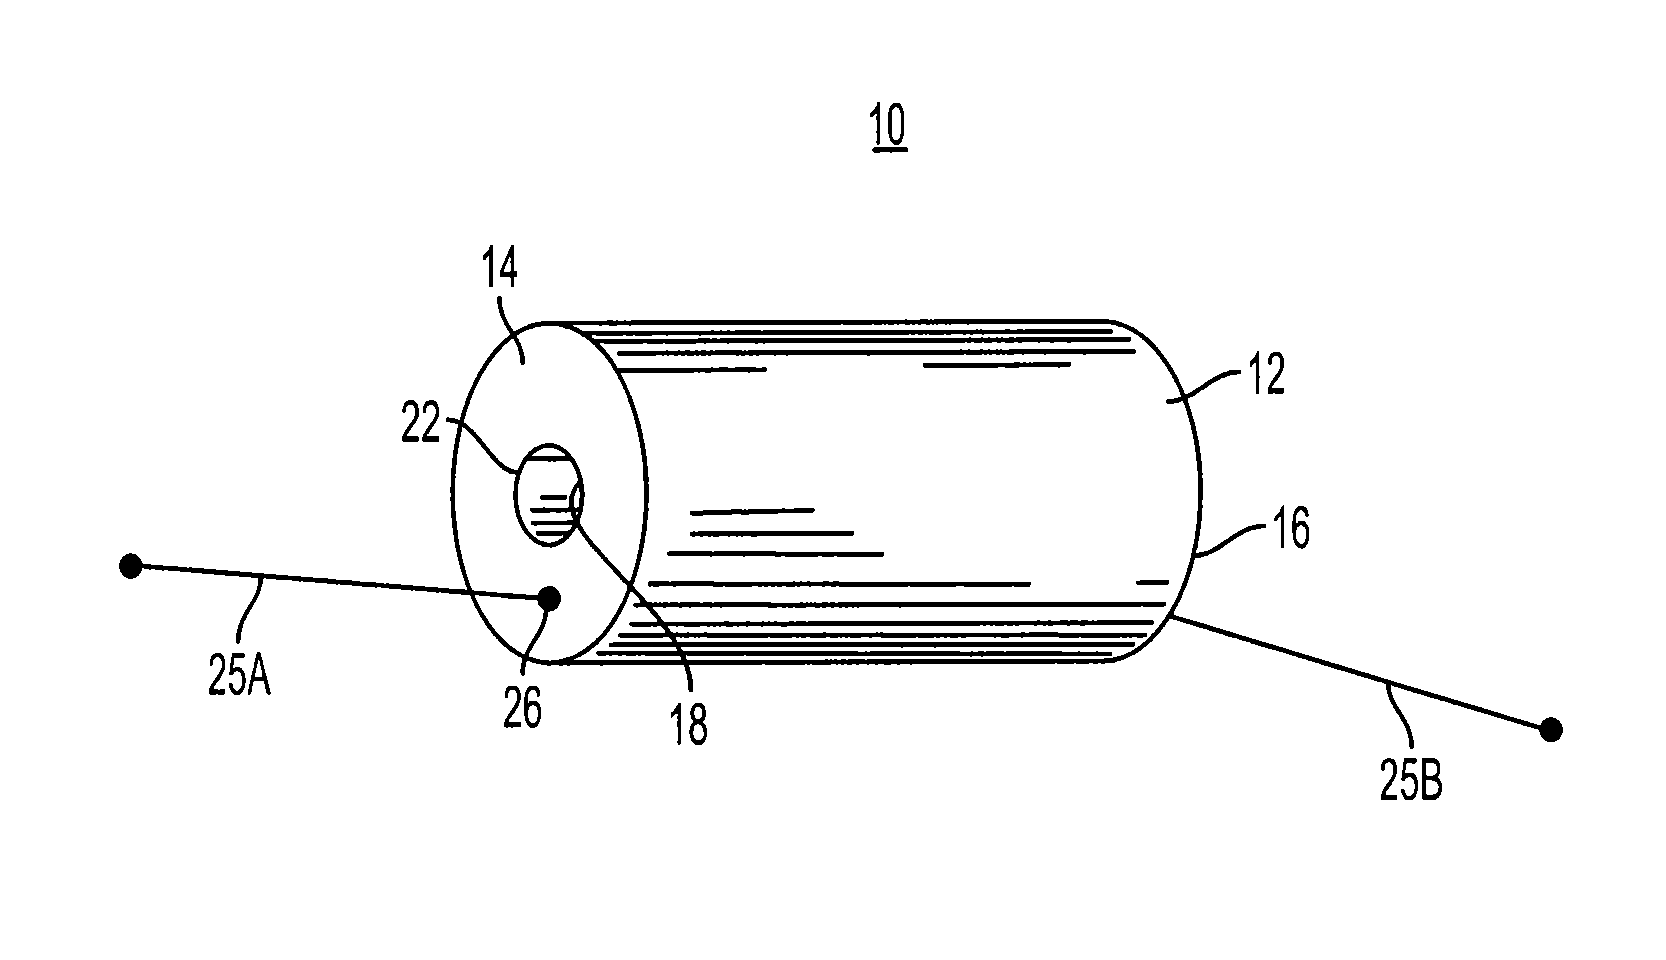 Multiple concentric wound film capacitors